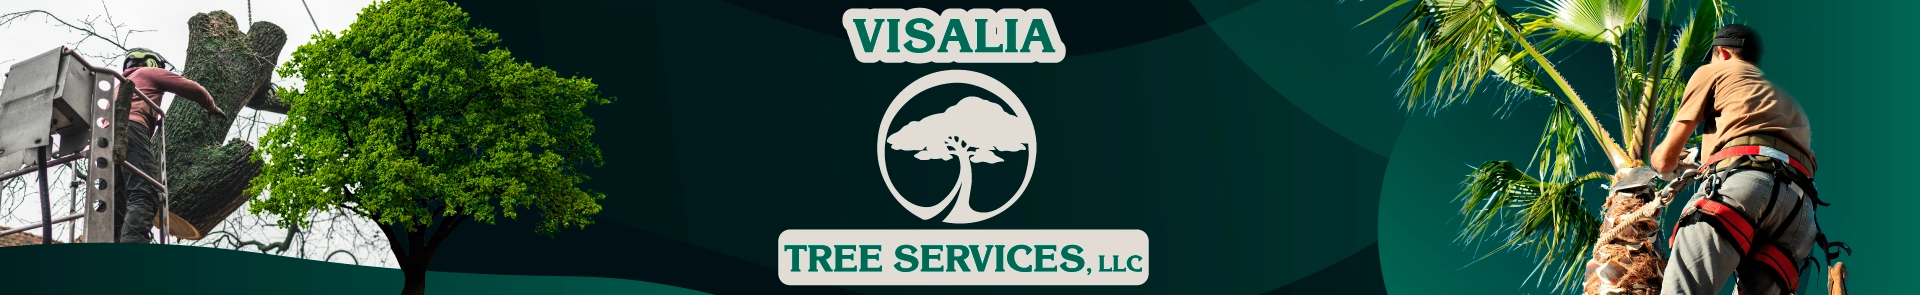 Visalia Tree Service, LLC Logo